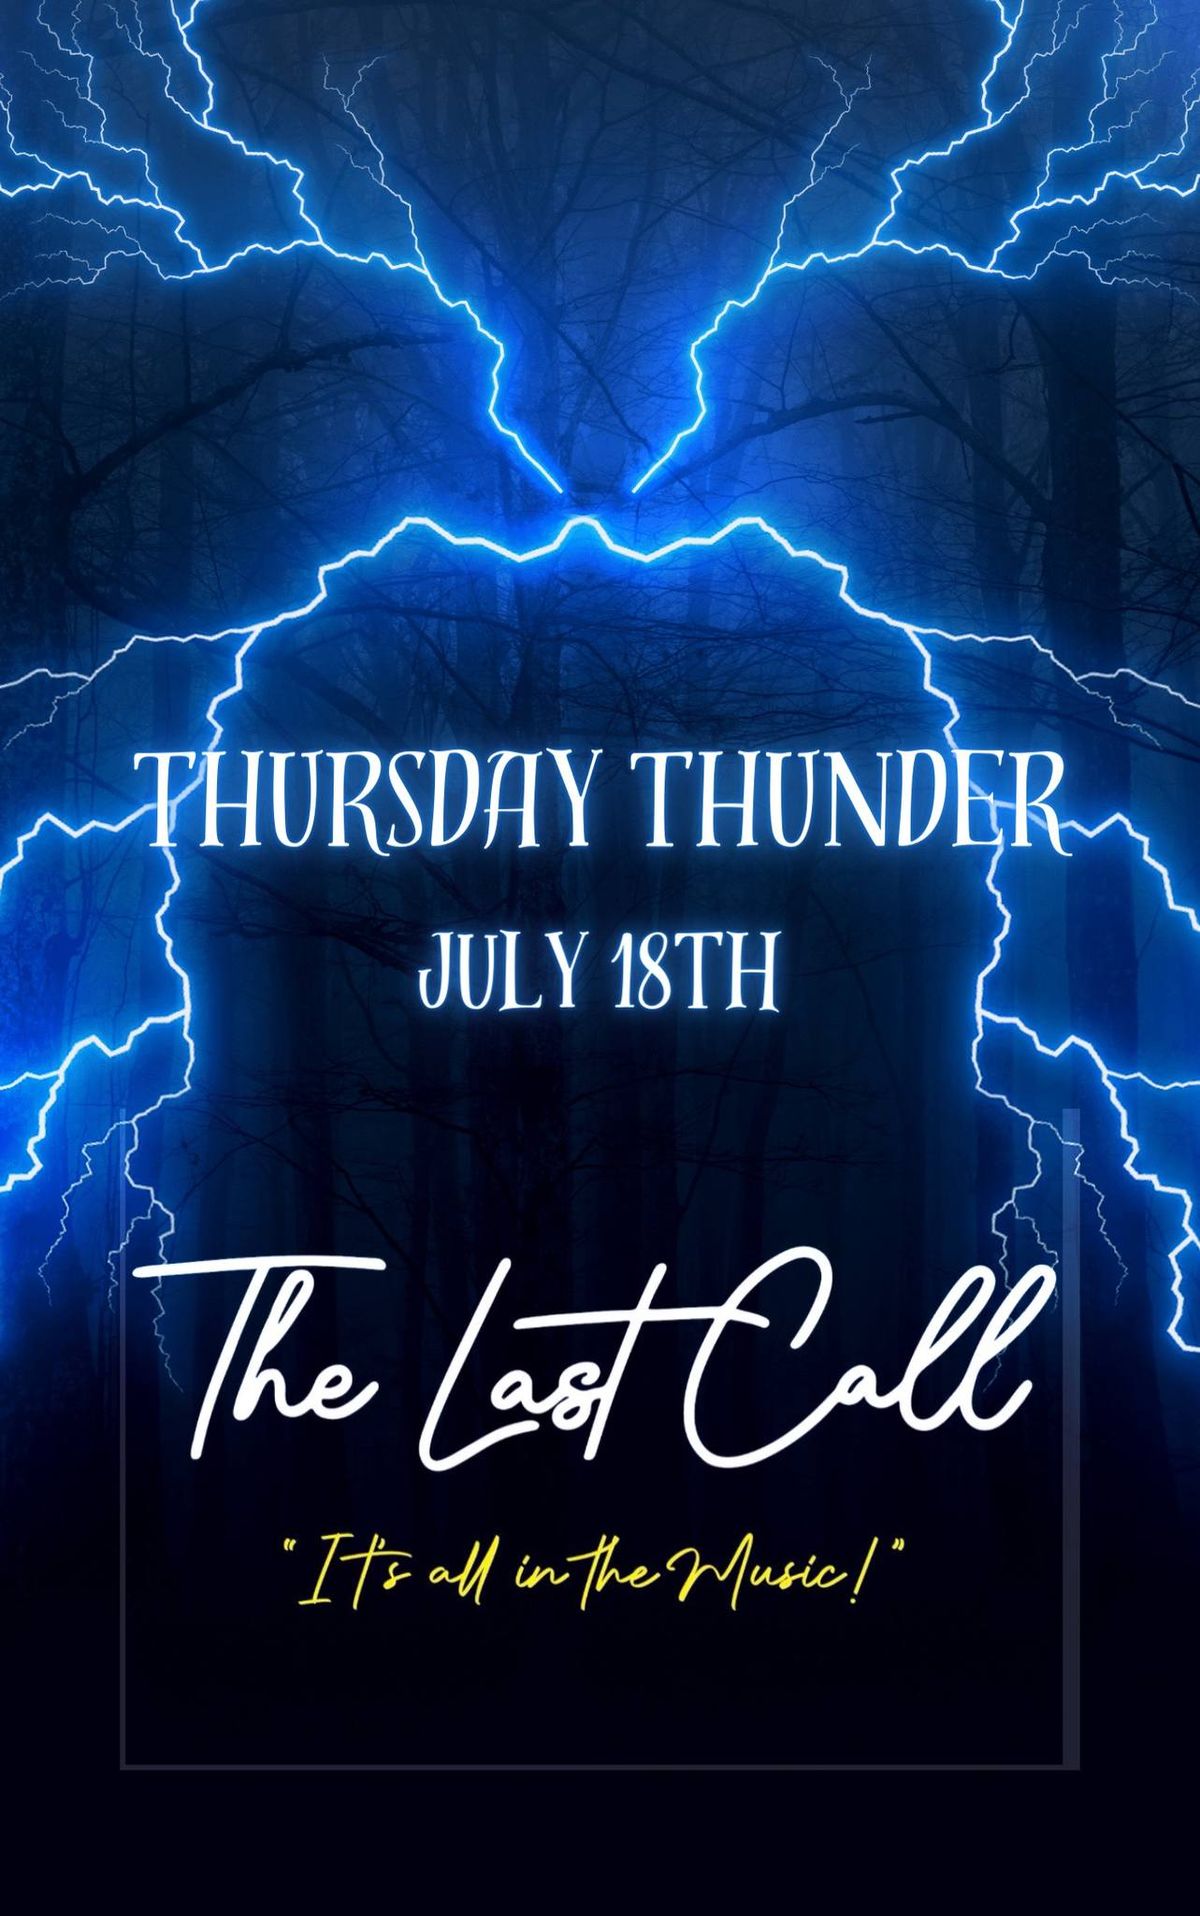 The Last Call at Thursday Thunder 